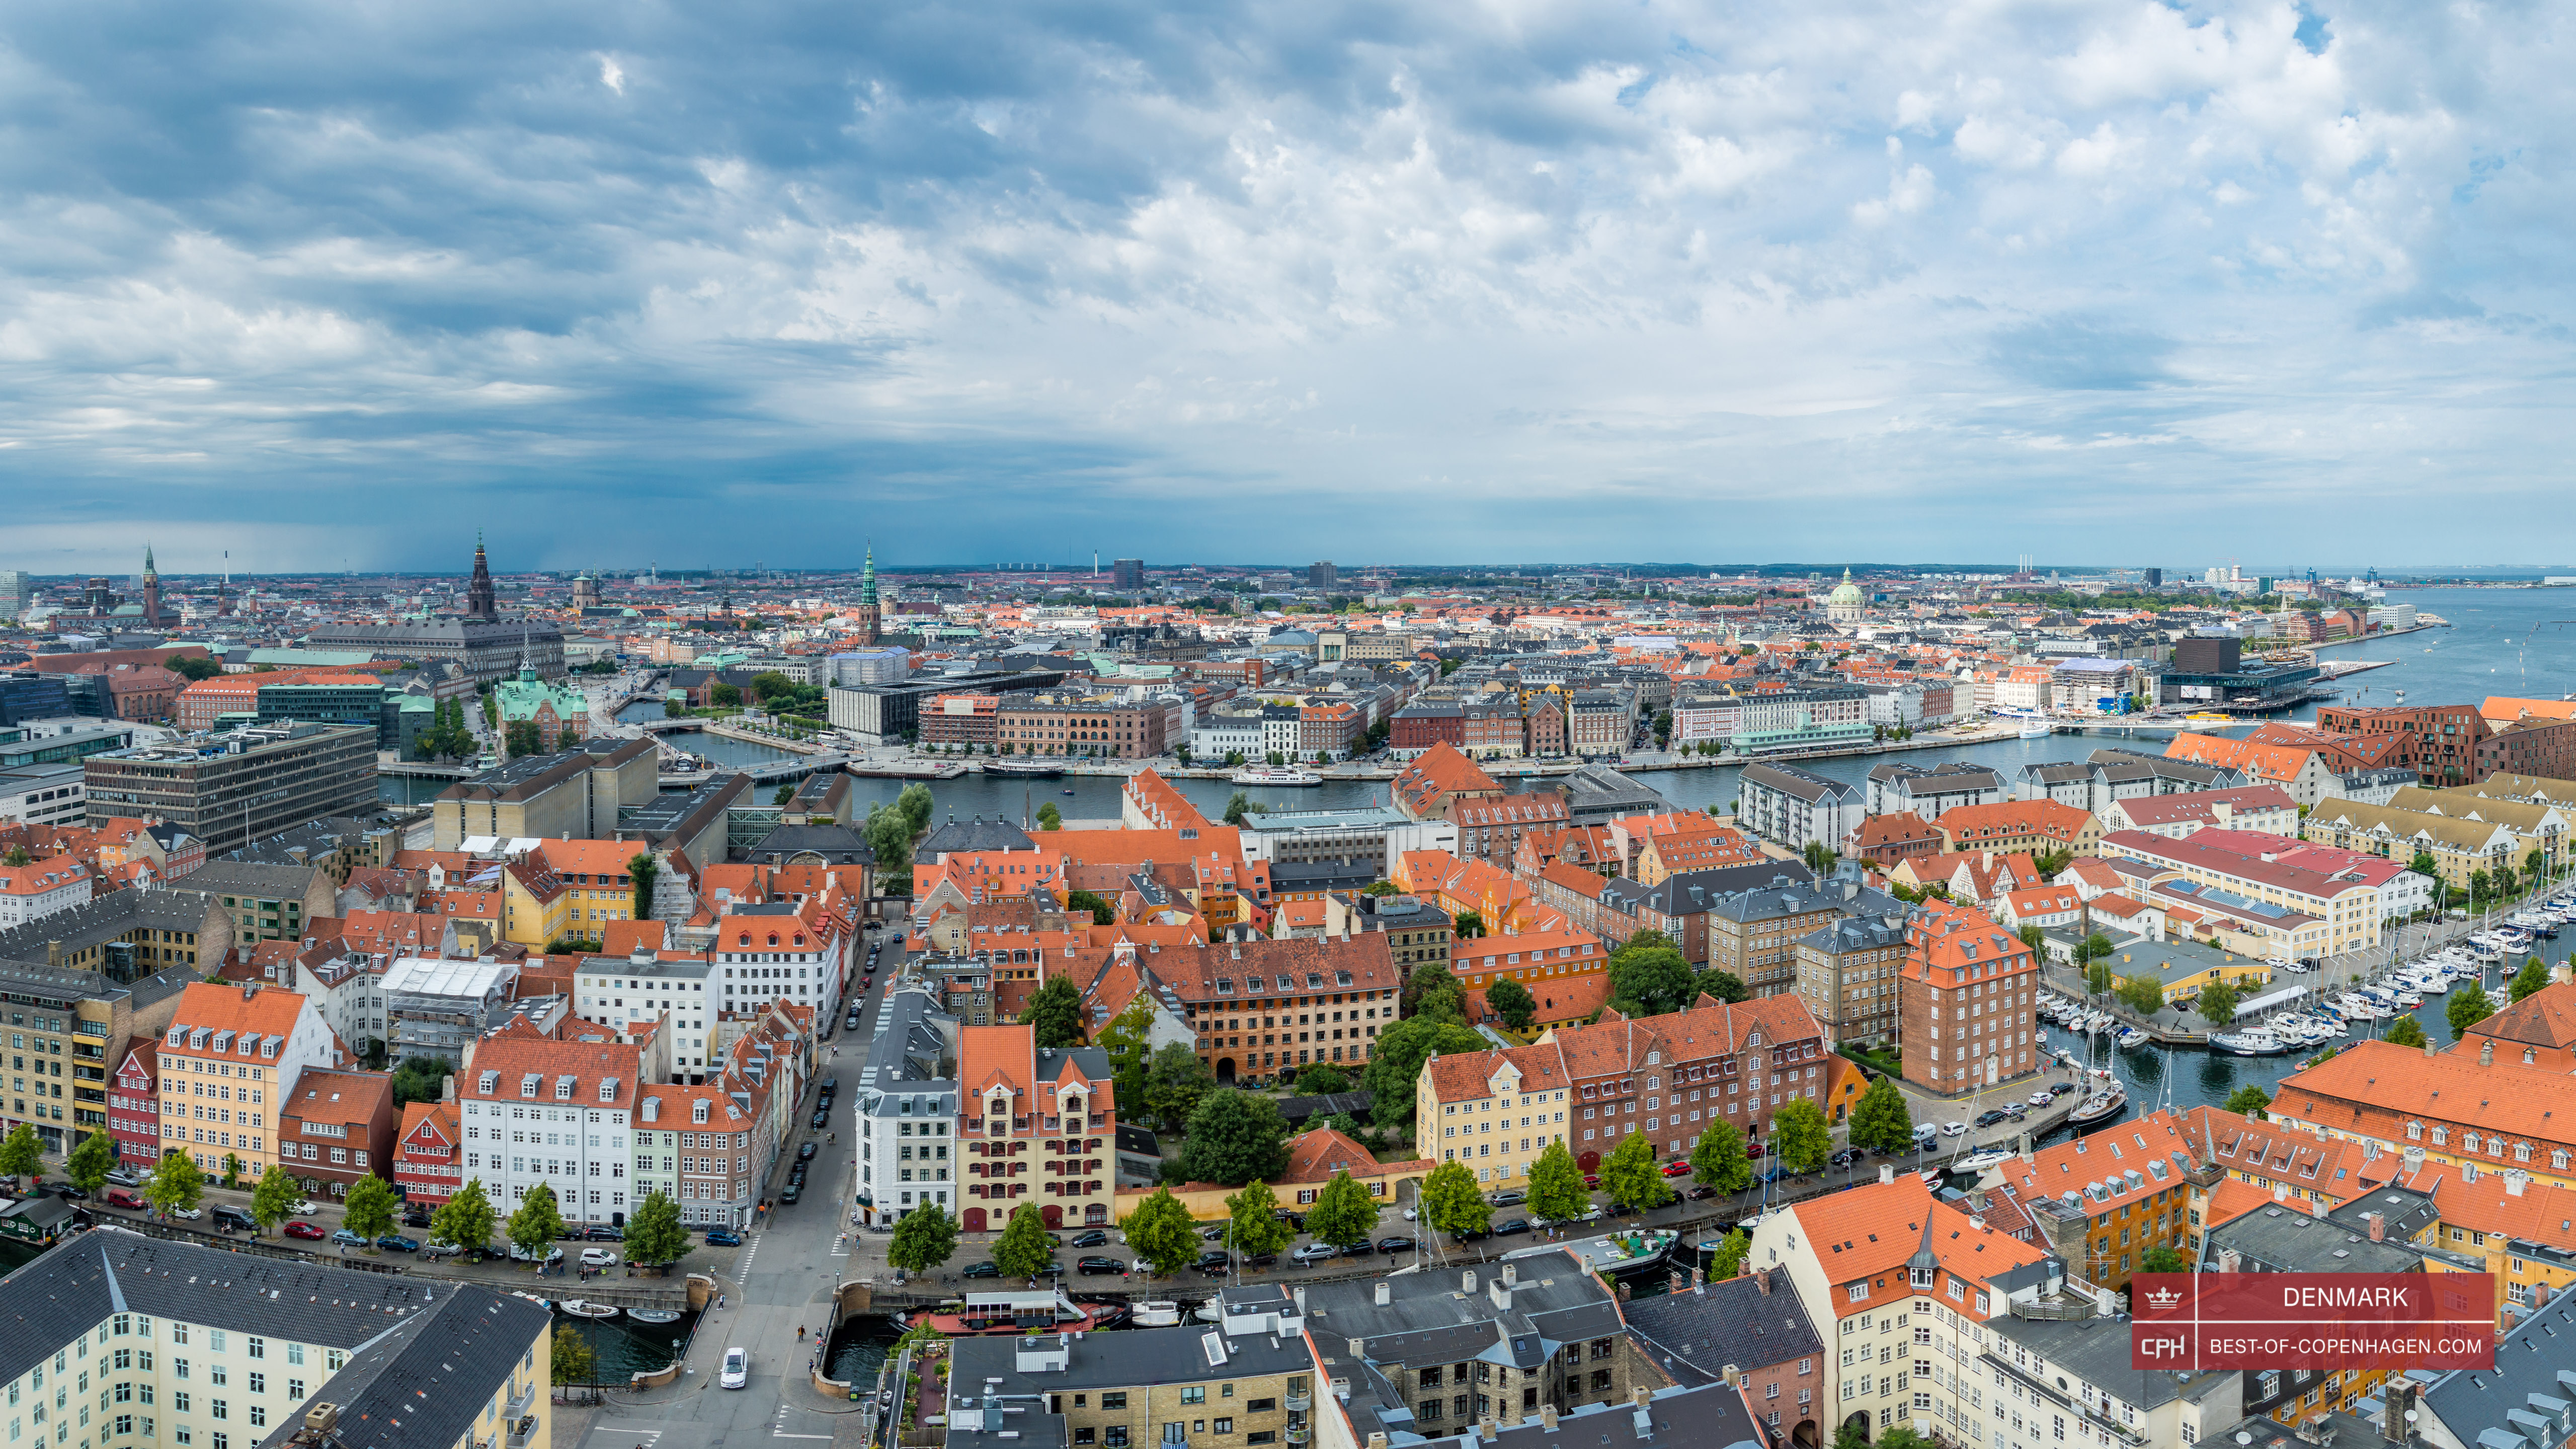 Панорамный вид со шпиля церкви Христа Спасителя, Копенгаген, Дания